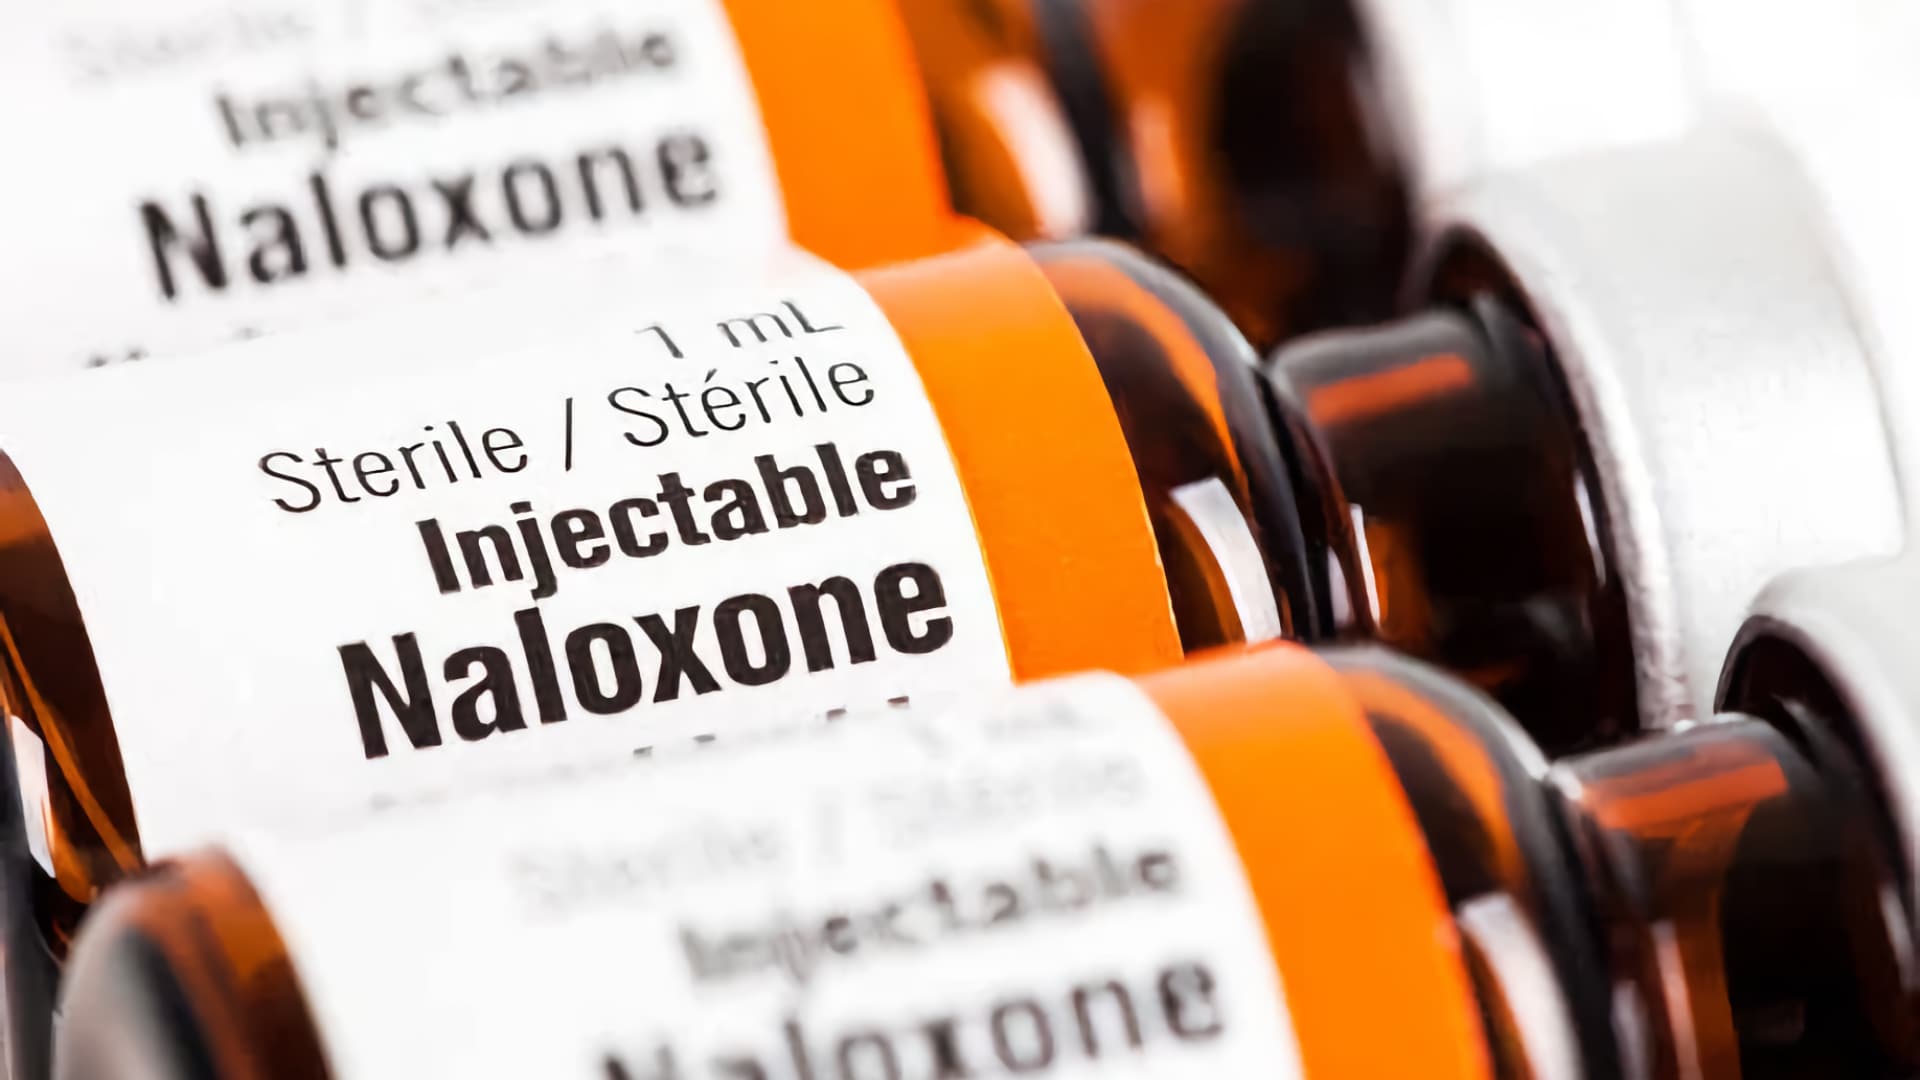 Reform advances to facilitate access to naloxone as treatment for opioid overdose